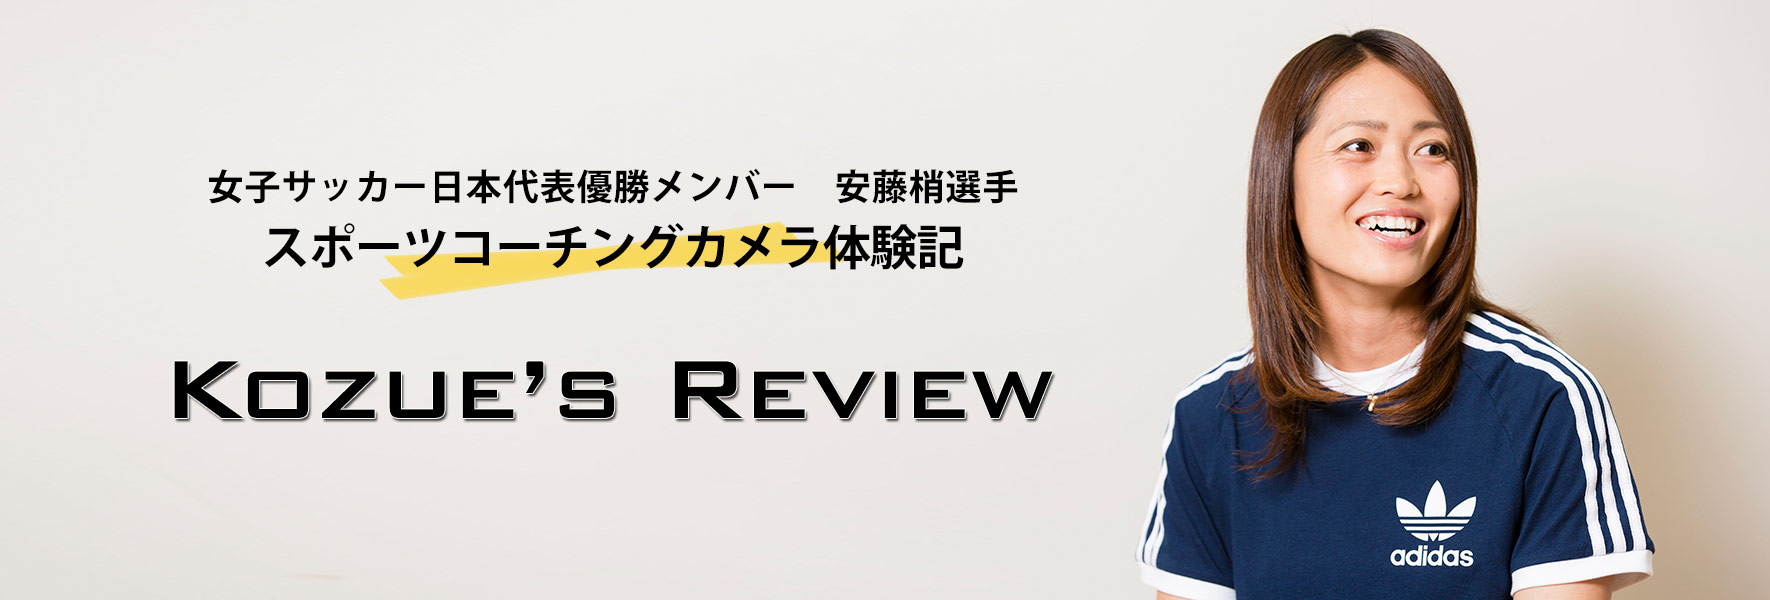 Kozue S Review スポーツコーチングカメラシステム Jvc